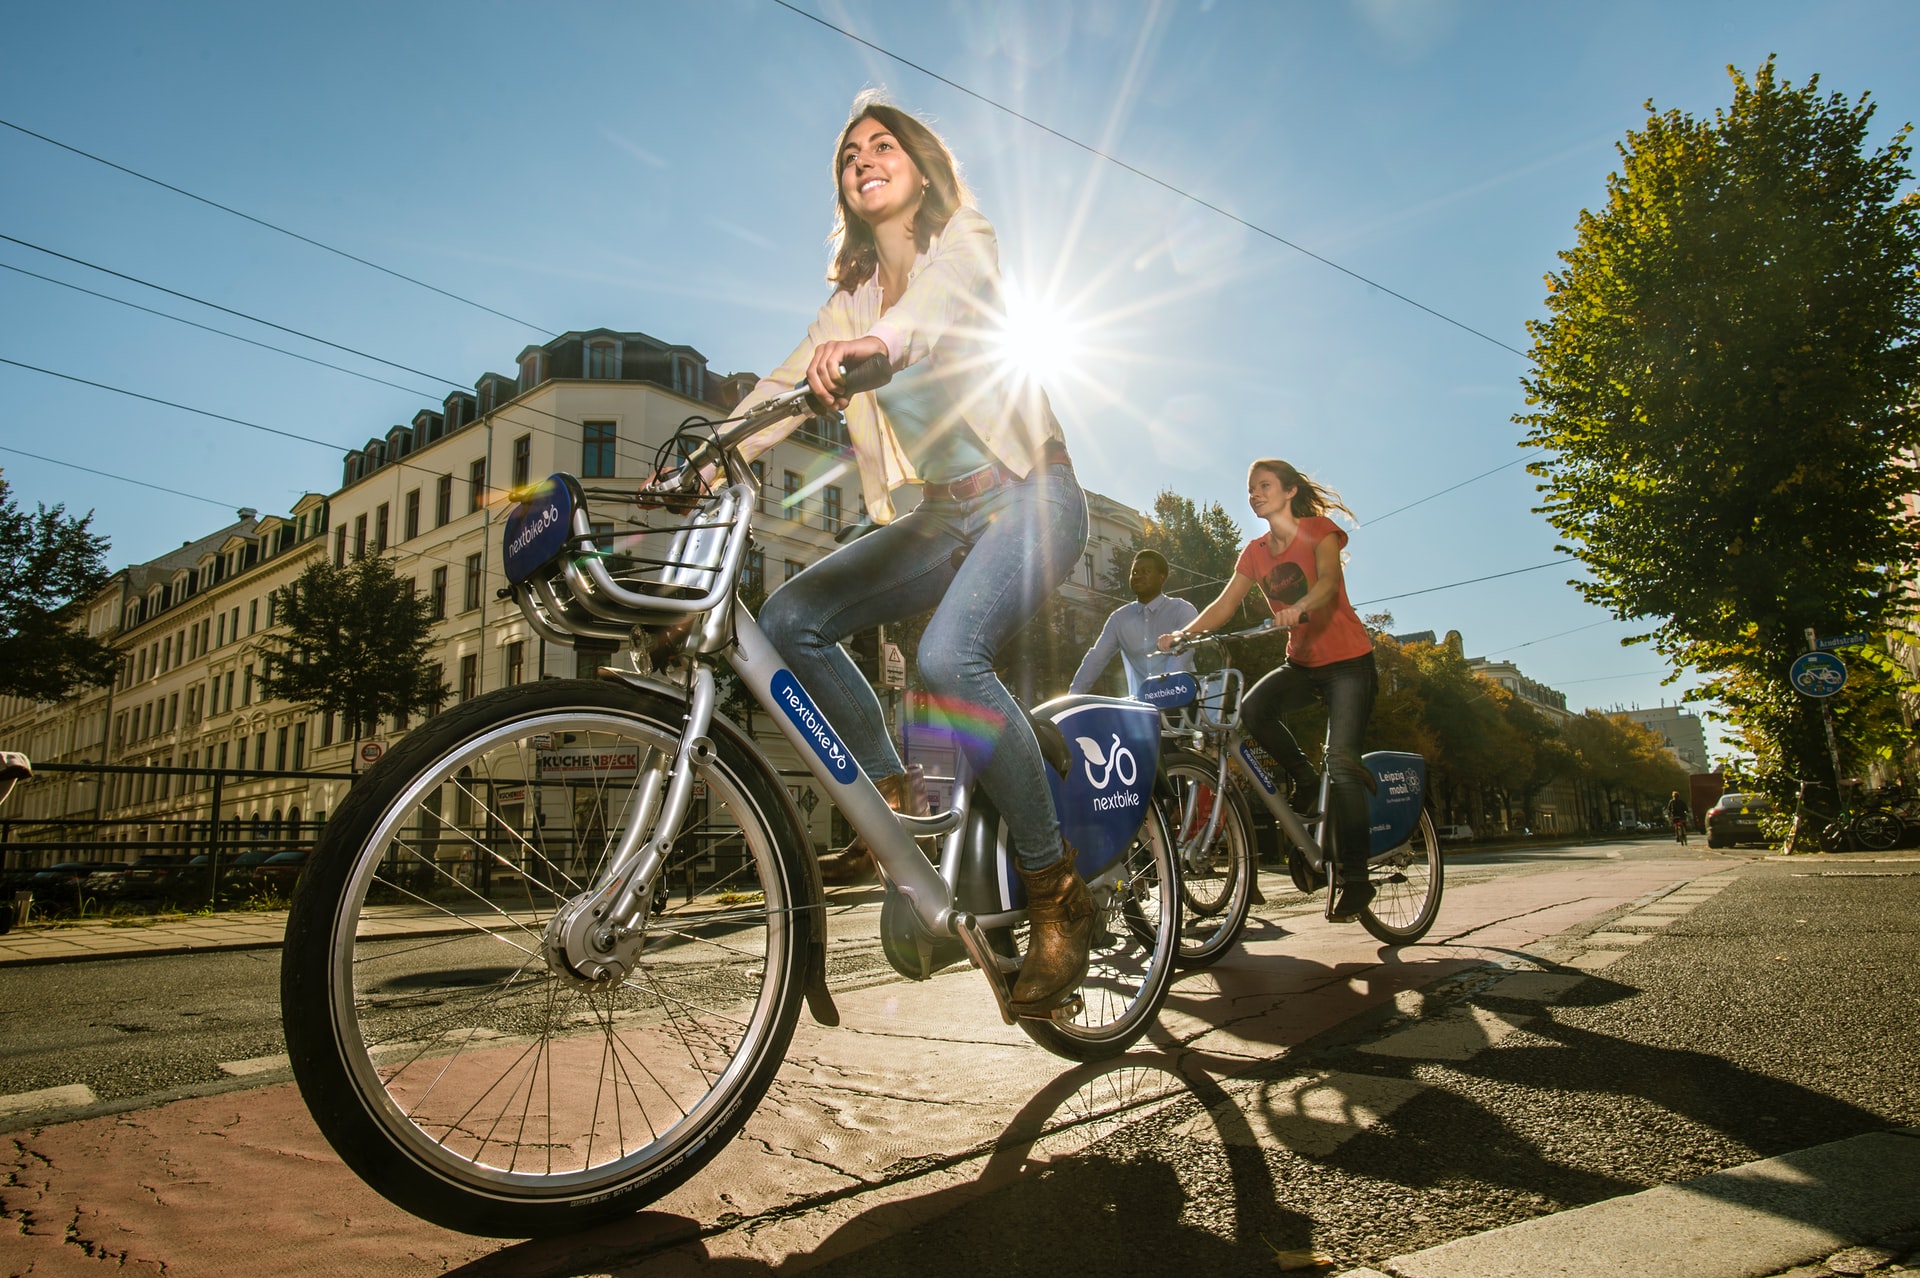 Bike-friendly cities